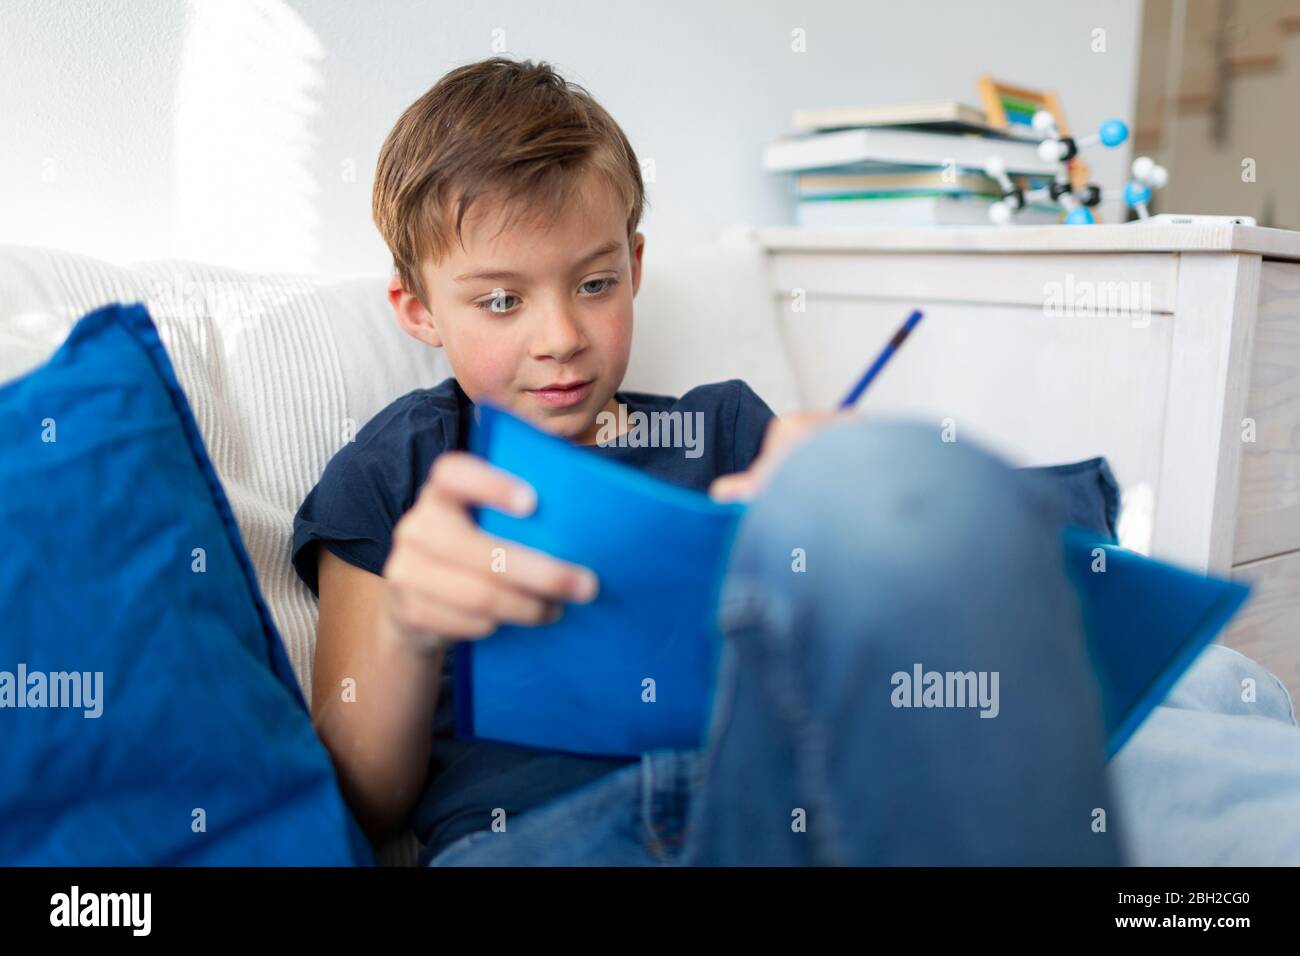 Boy doing homework at home during the corona crisis Stock Photo